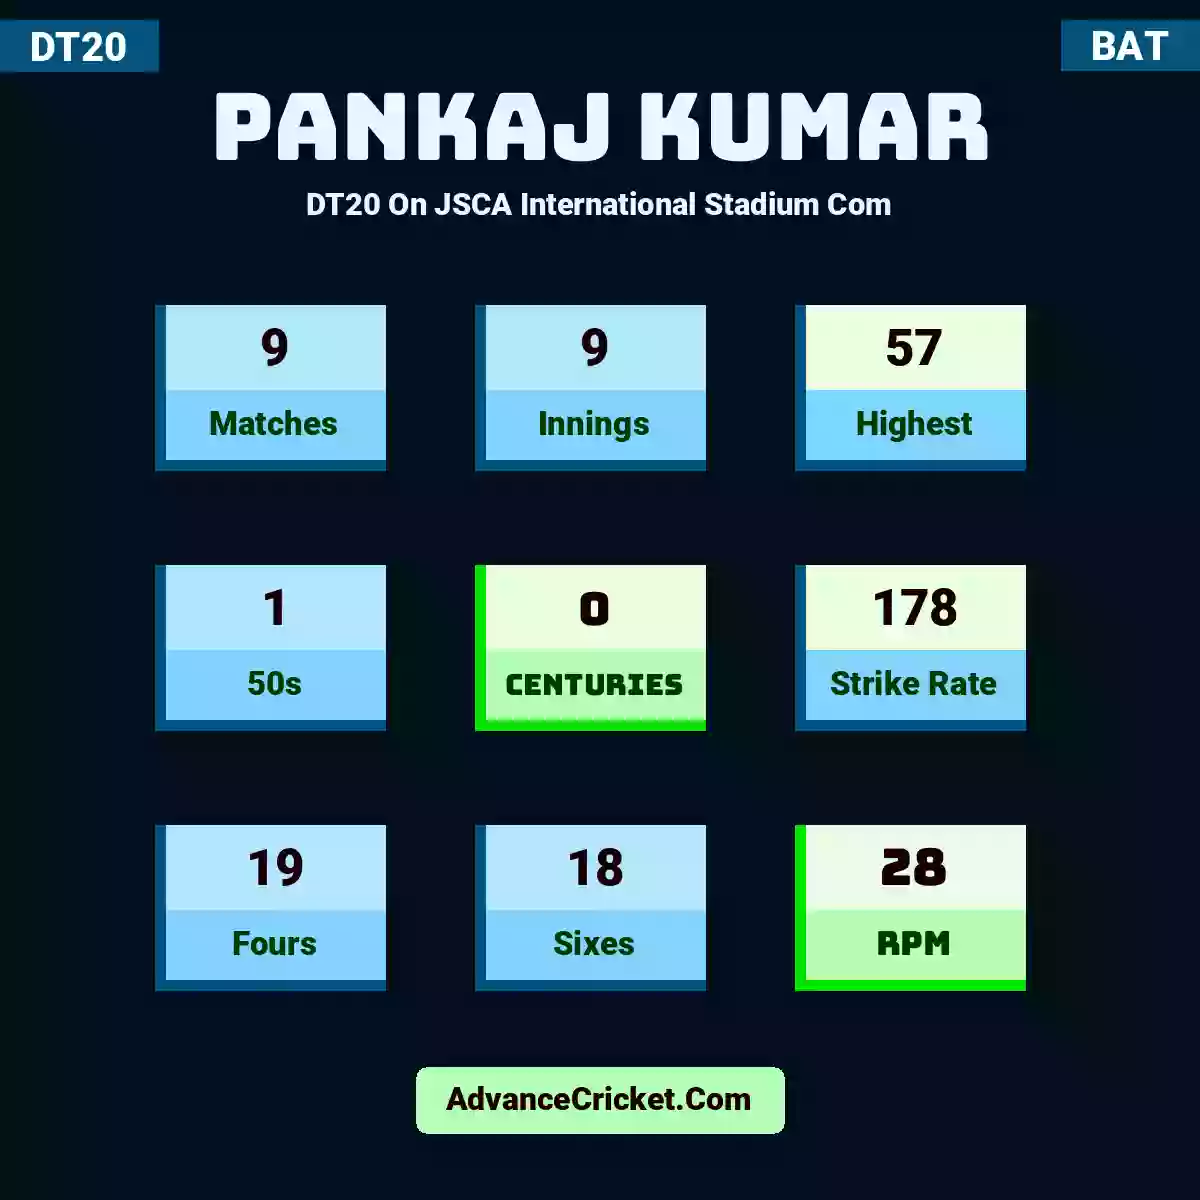 Pankaj Kumar DT20  On JSCA International Stadium Com, Pankaj Kumar played 9 matches, scored 57 runs as highest, 1 half-centuries, and 0 centuries, with a strike rate of 178. P.Kumar hit 19 fours and 18 sixes, with an RPM of 28.